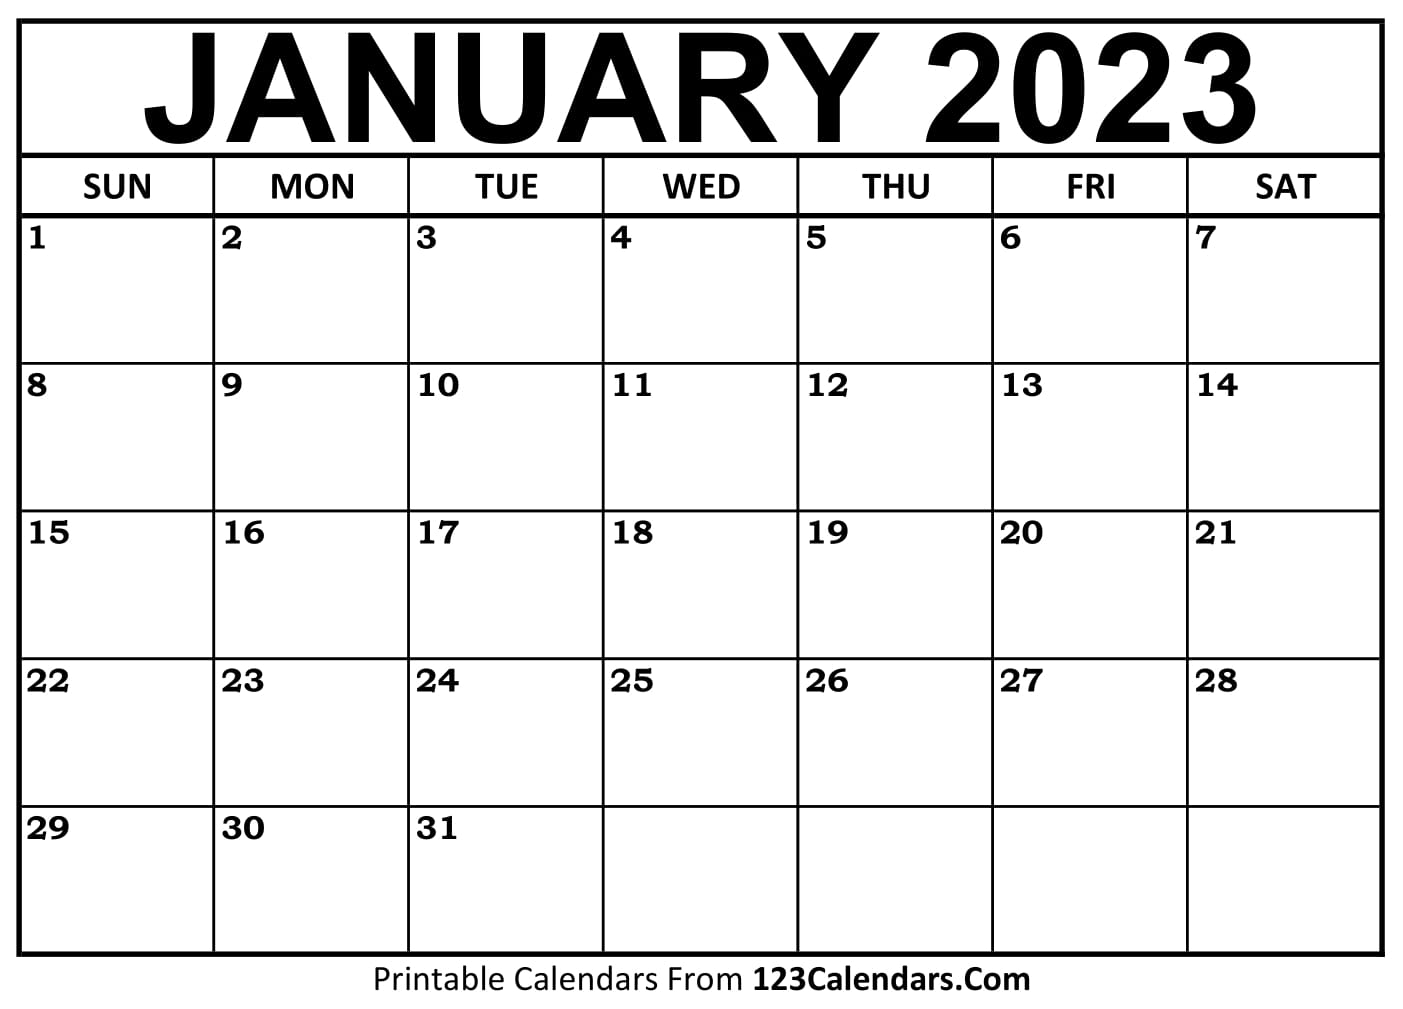 january-2023-calendar-free-printable-calendar-january-2023-calendar